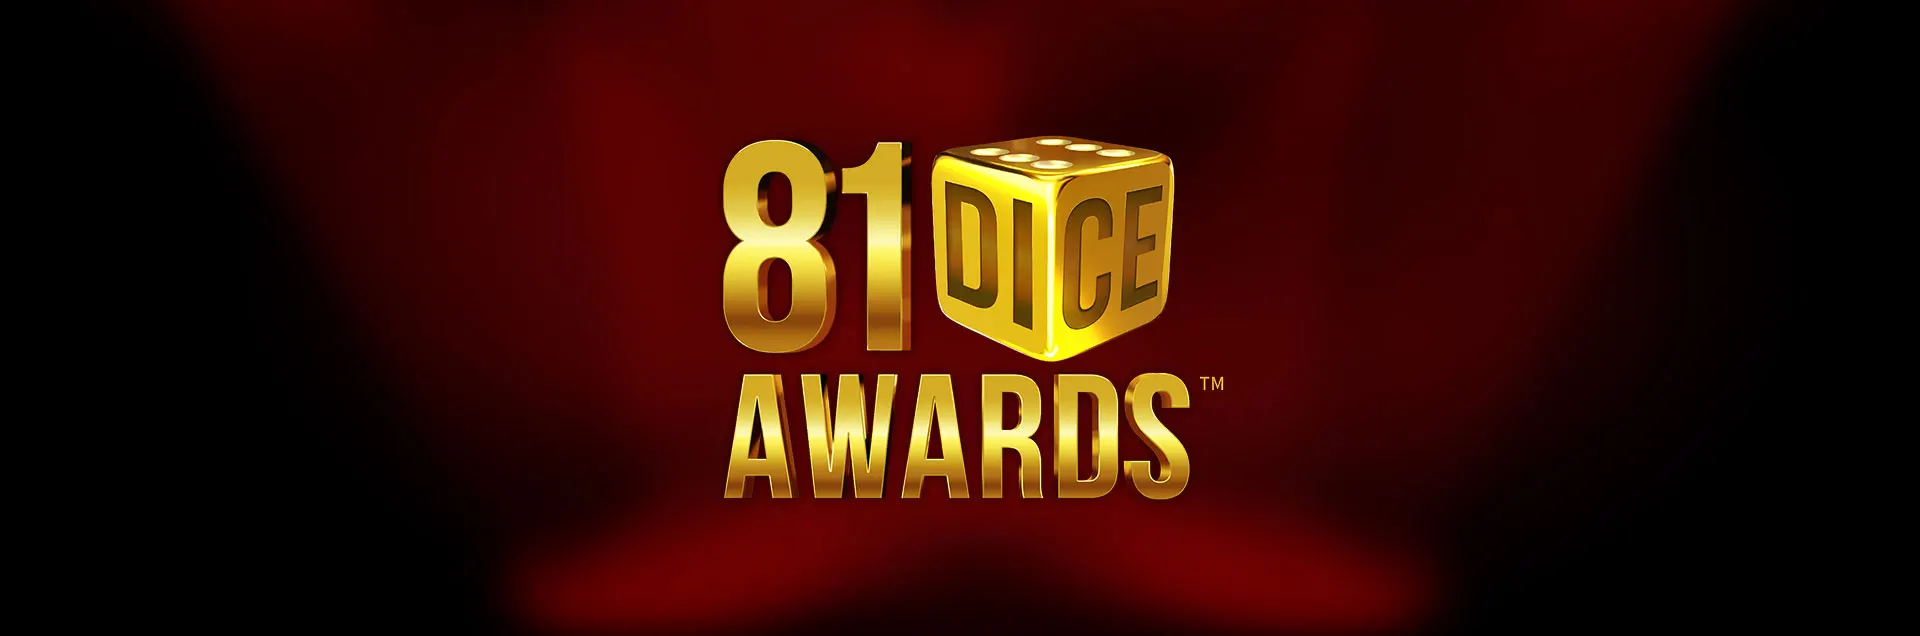 81 Dice Awards